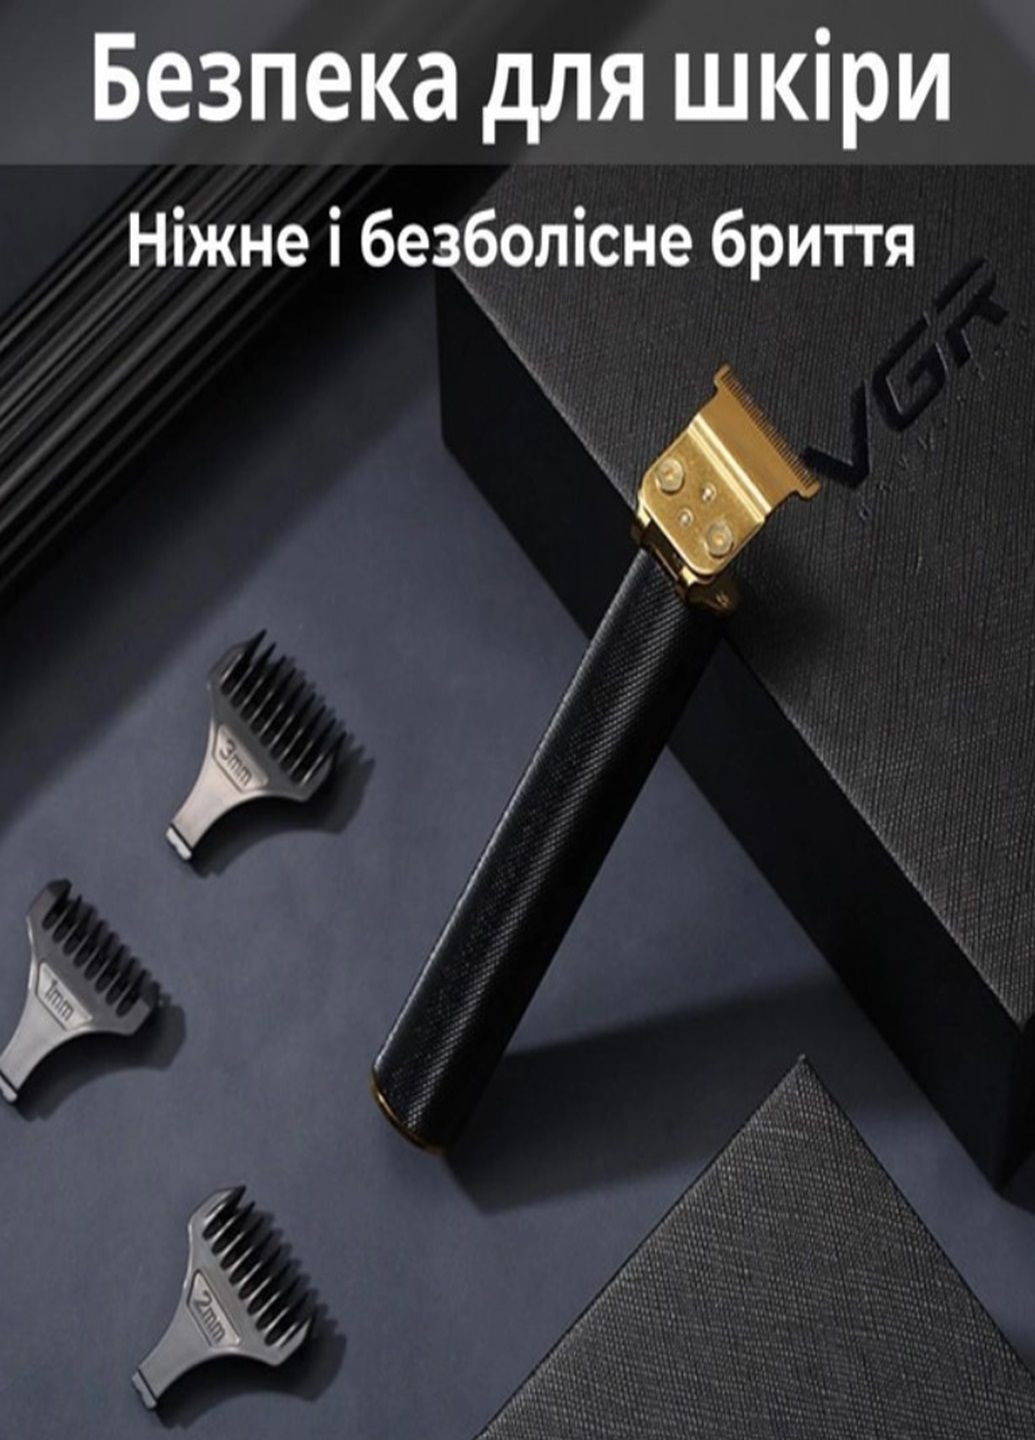 Машинка для стрижки волос V-179 триммер на аккумуляторе VGR (289357750)